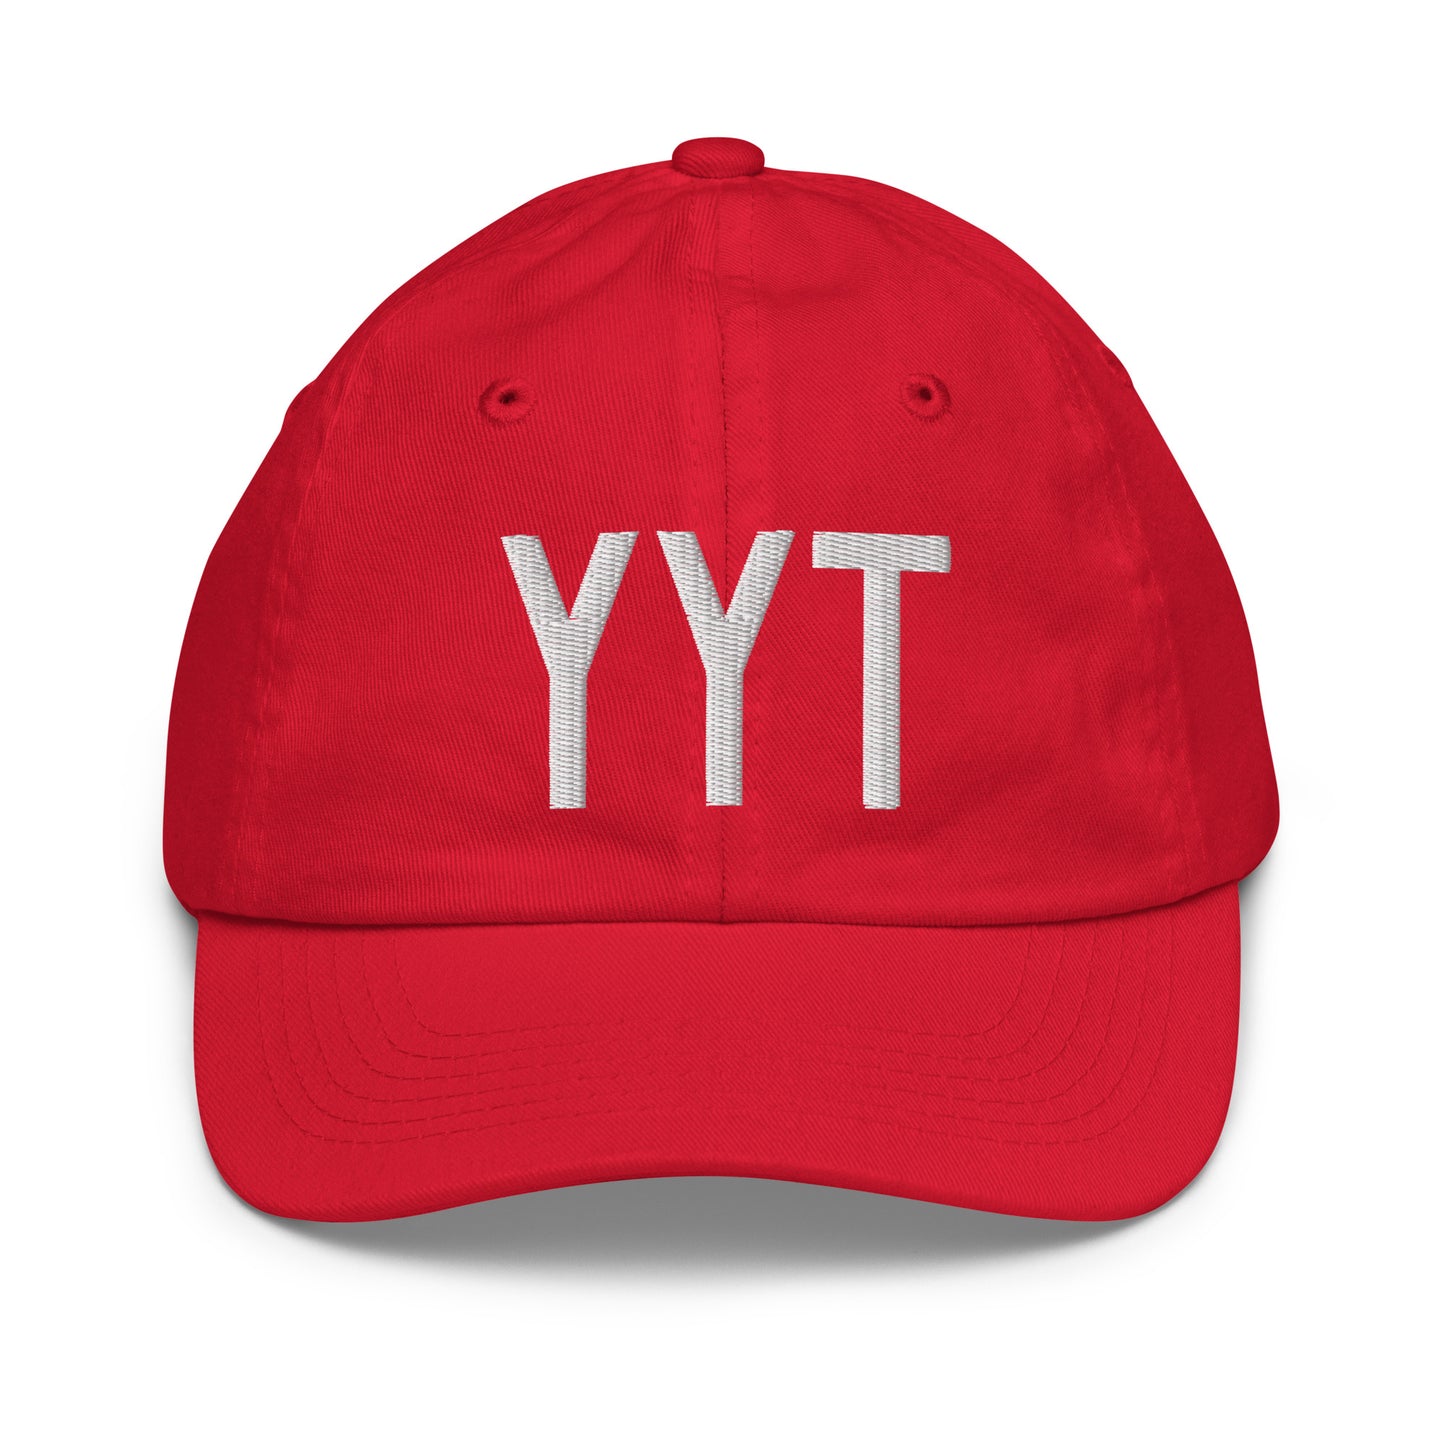 Airport Code Kid's Baseball Cap - White • YYT St. John's • YHM Designs - Image 17